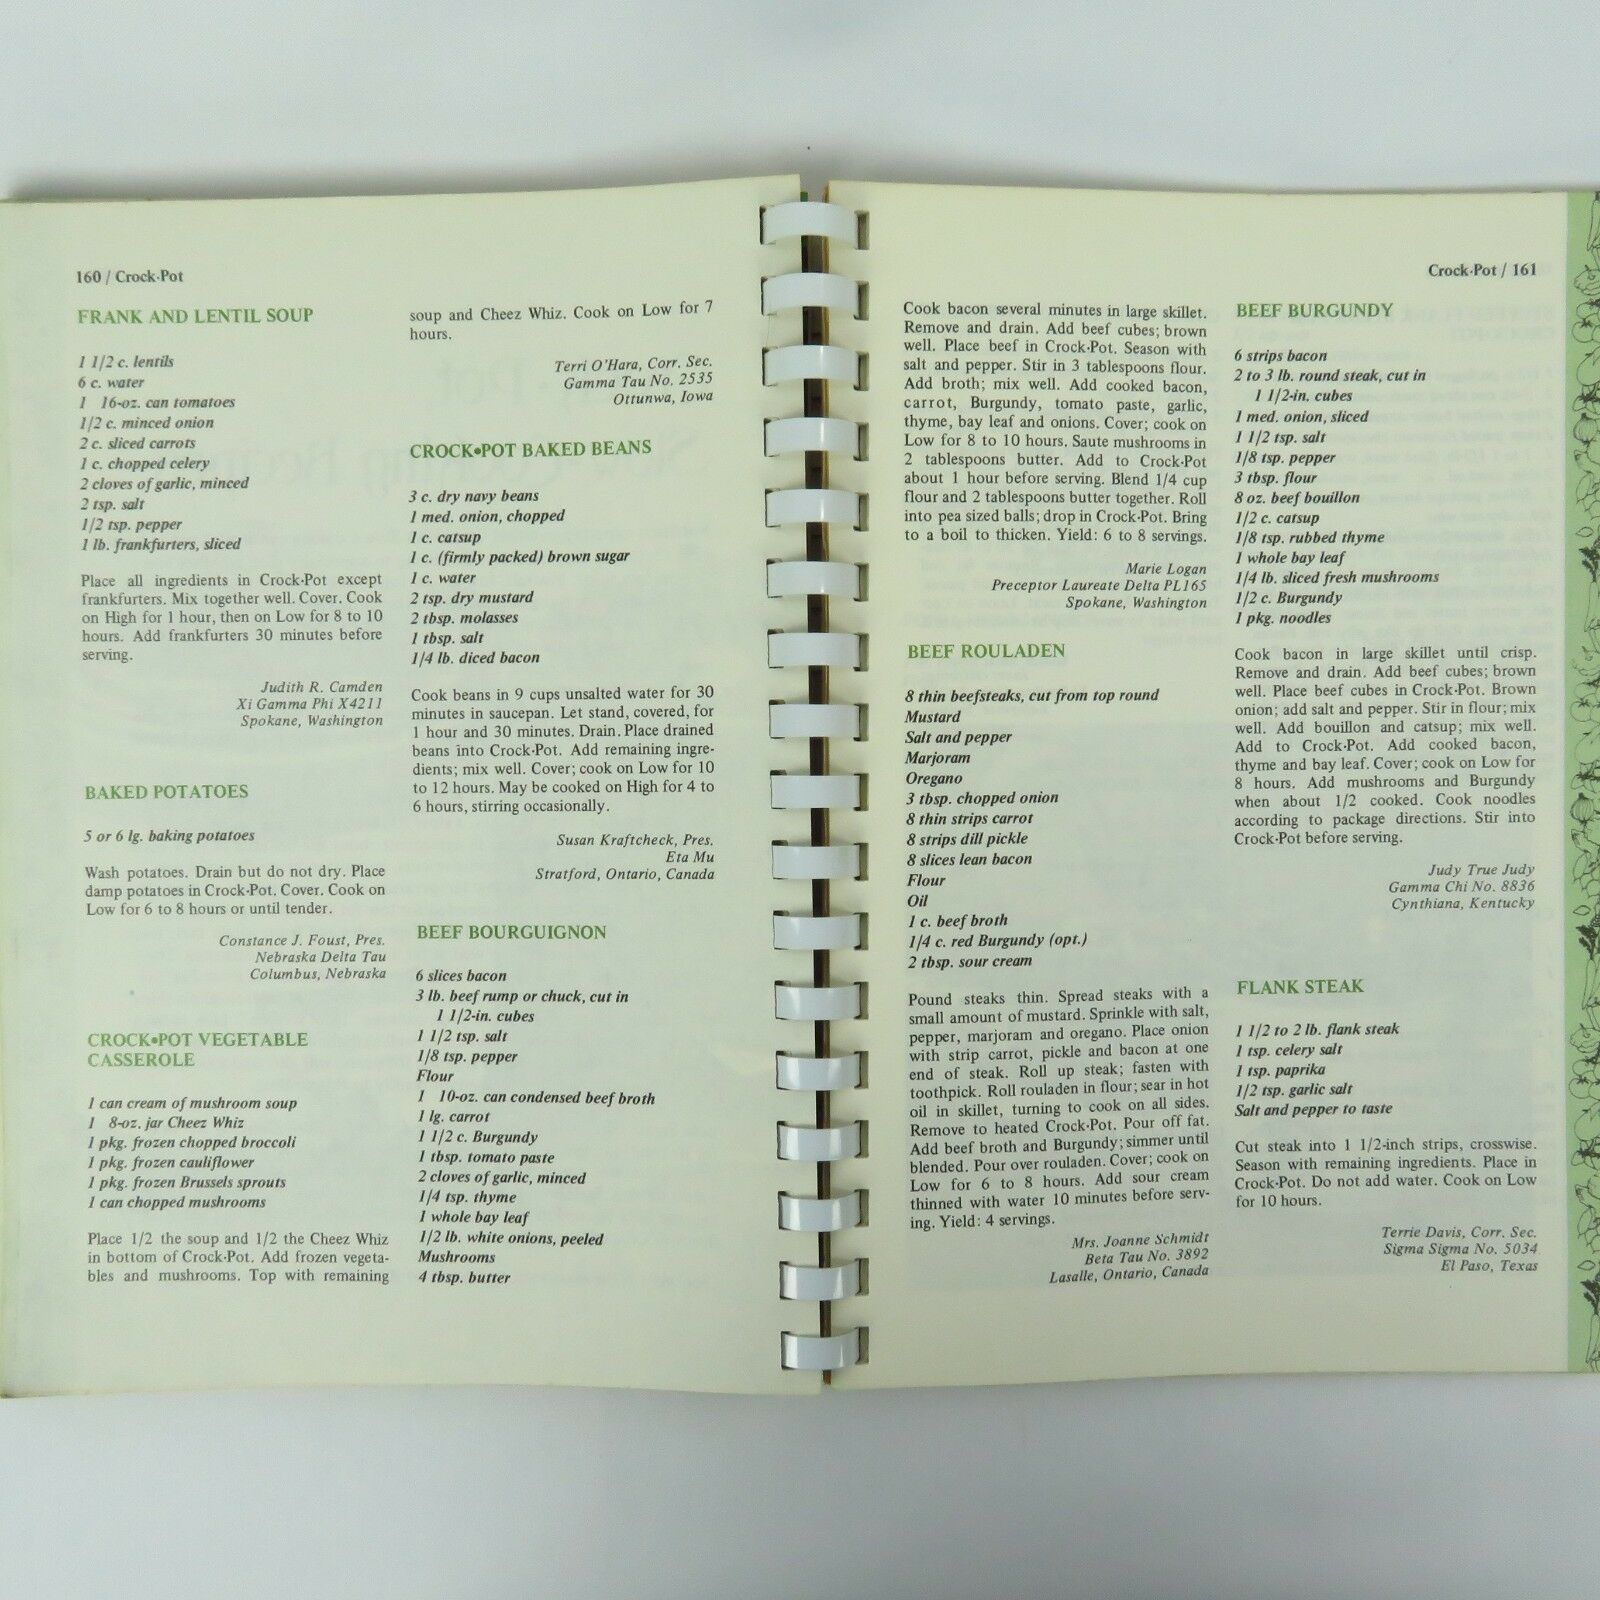 Vintage Sorority Cookbook Dieting to Stay Healthy Beta Sigma Phi International 1977 Favorite Recipes - At Grandma's Table